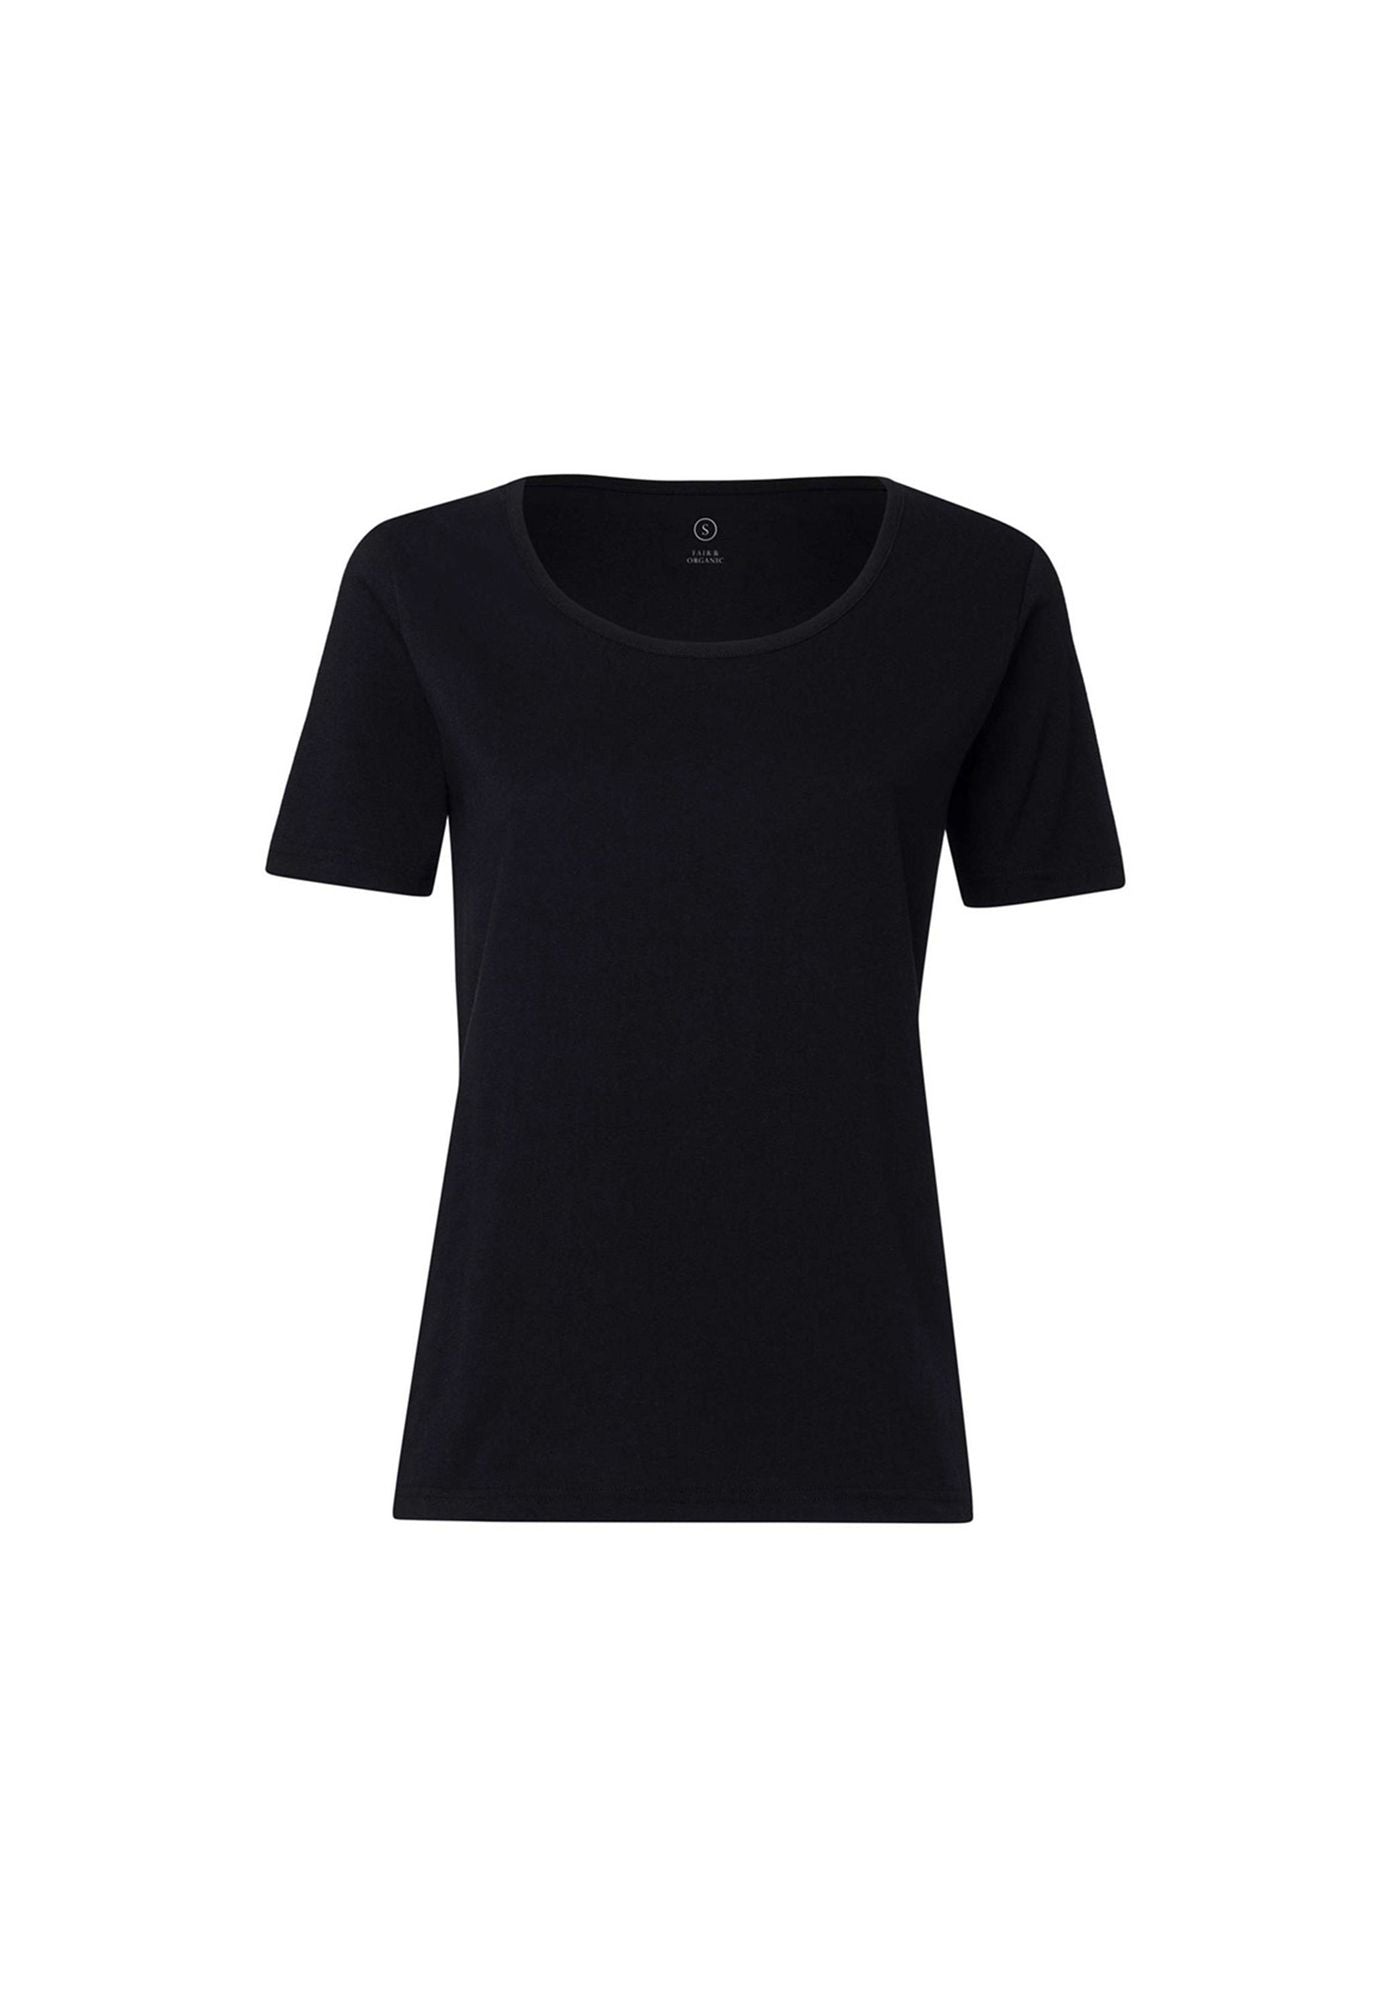 BTD64 T-Shirt Black